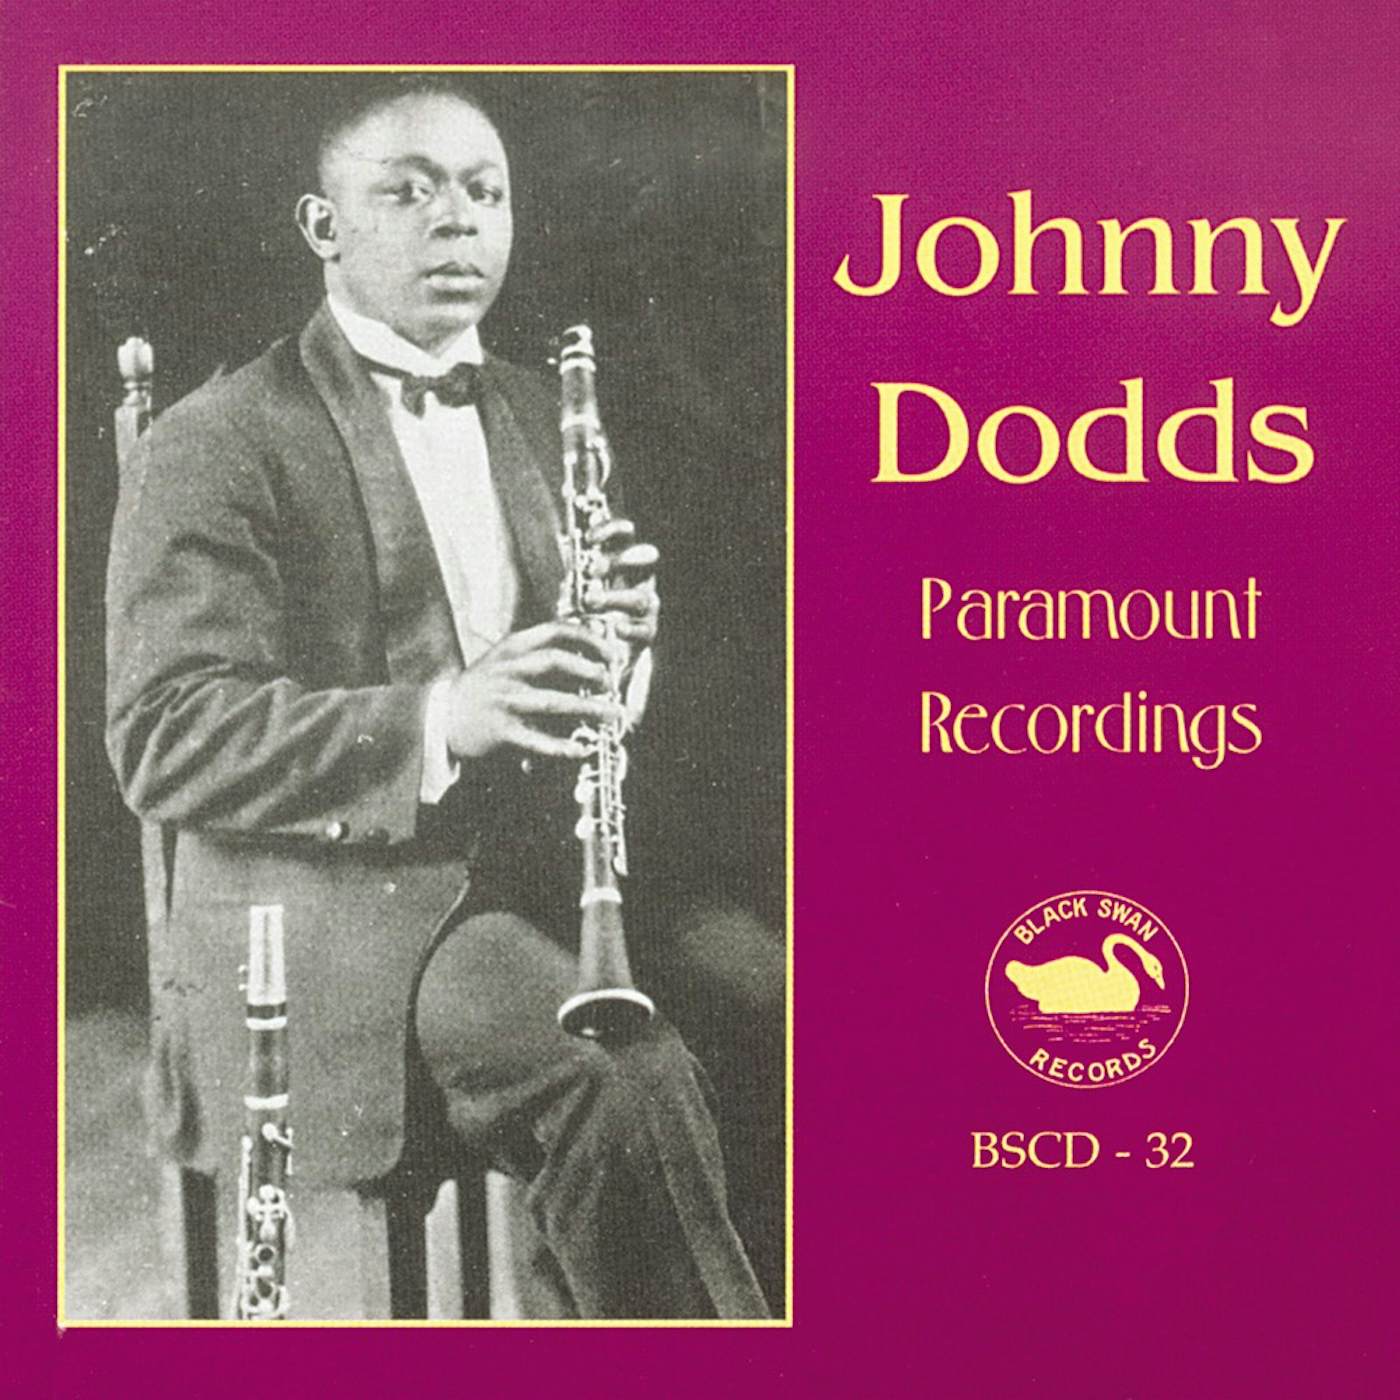 Johnny Dodds PARAMOUNT RECORDINGS VOL.1 CD